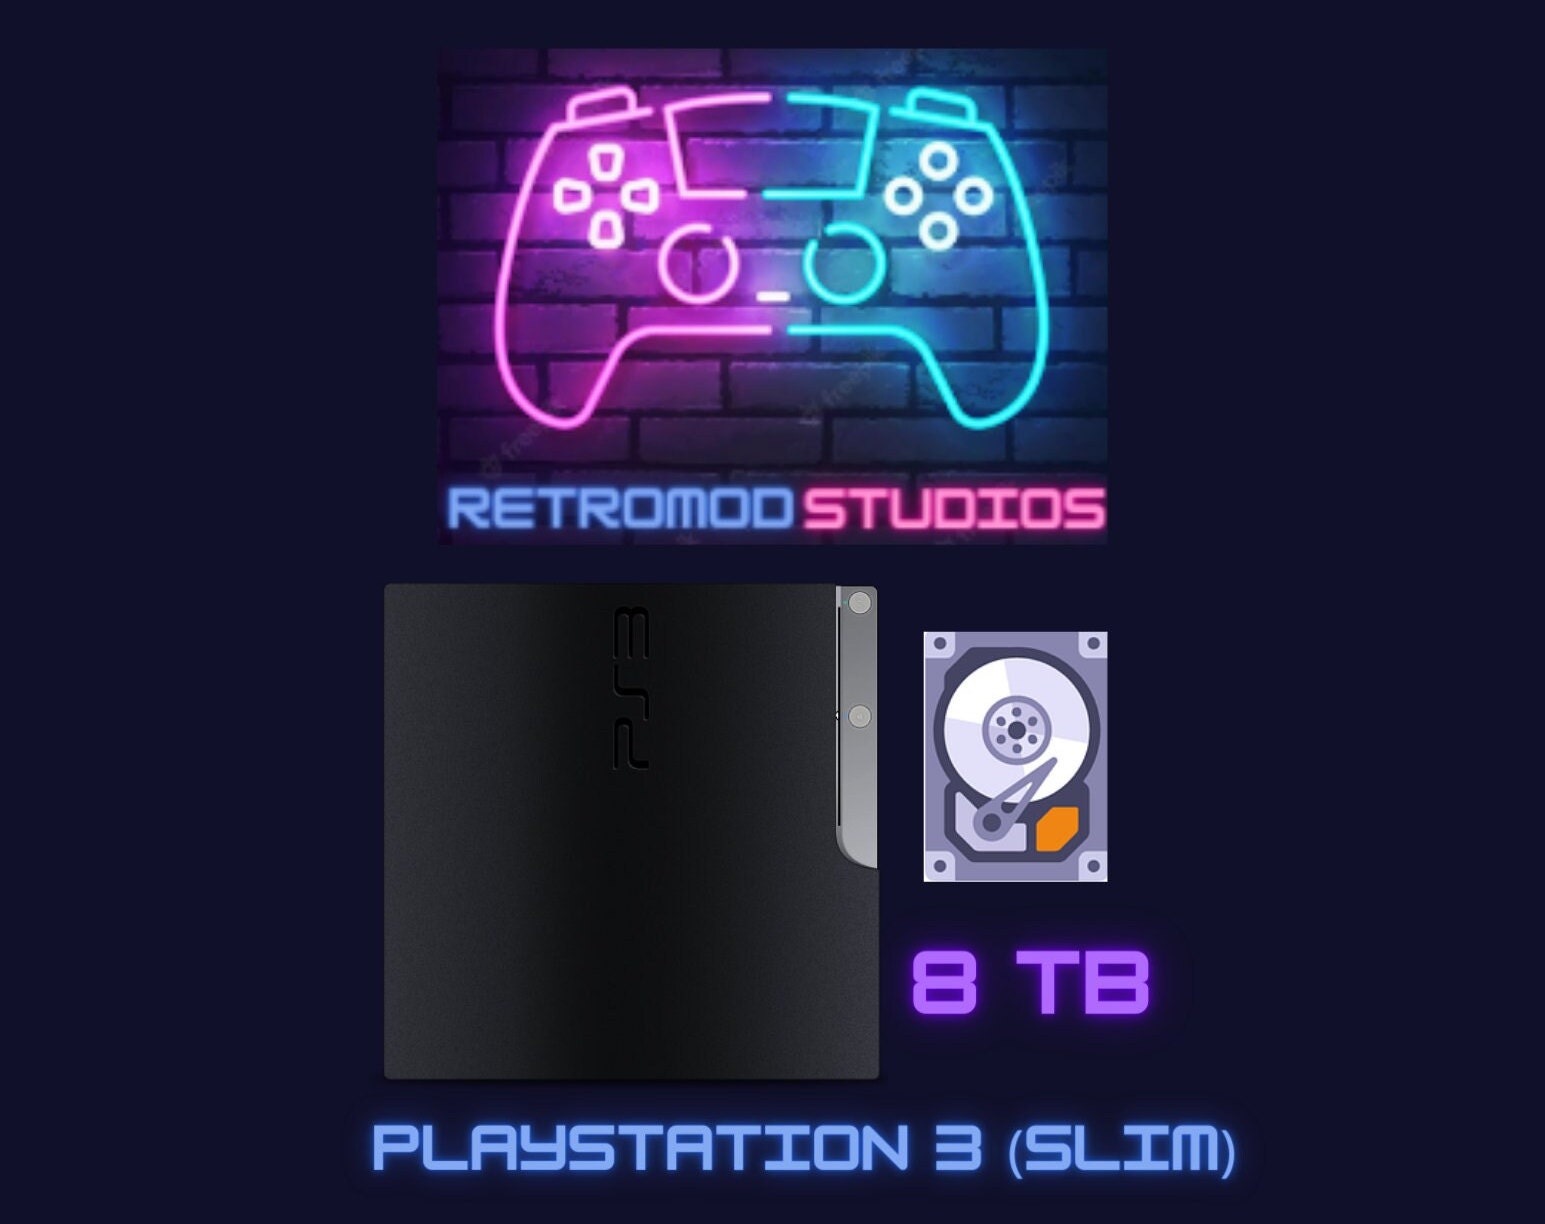 Playstation 3 4.90 Evilnat Console W/ 1 TB Internal SSD 